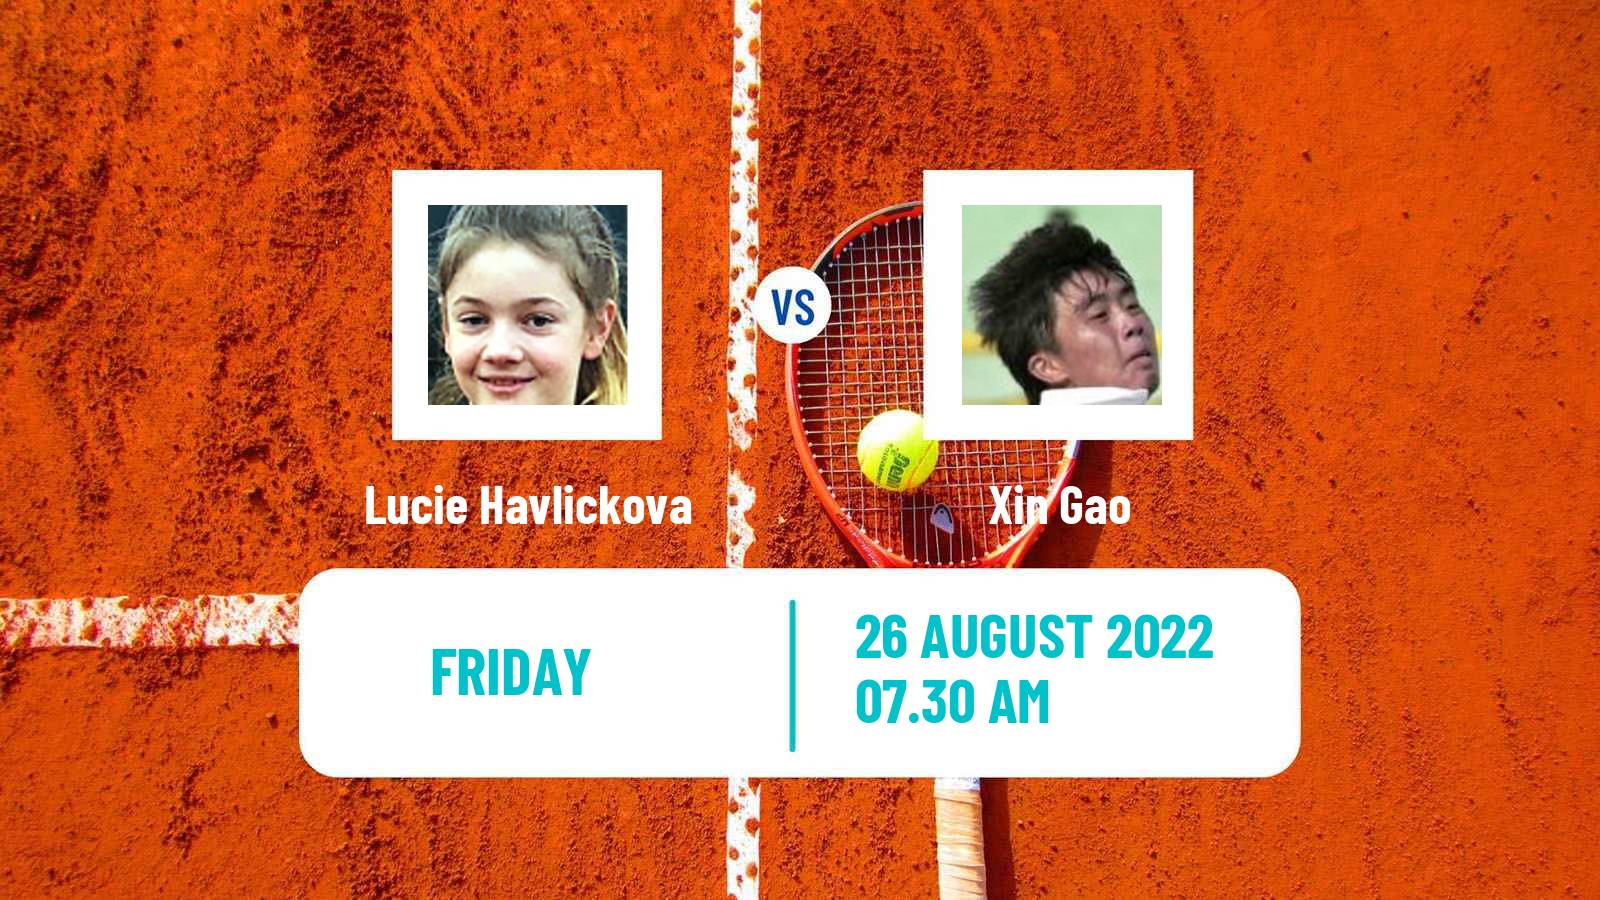 Tennis ITF Tournaments Lucie Havlickova - Xin Gao